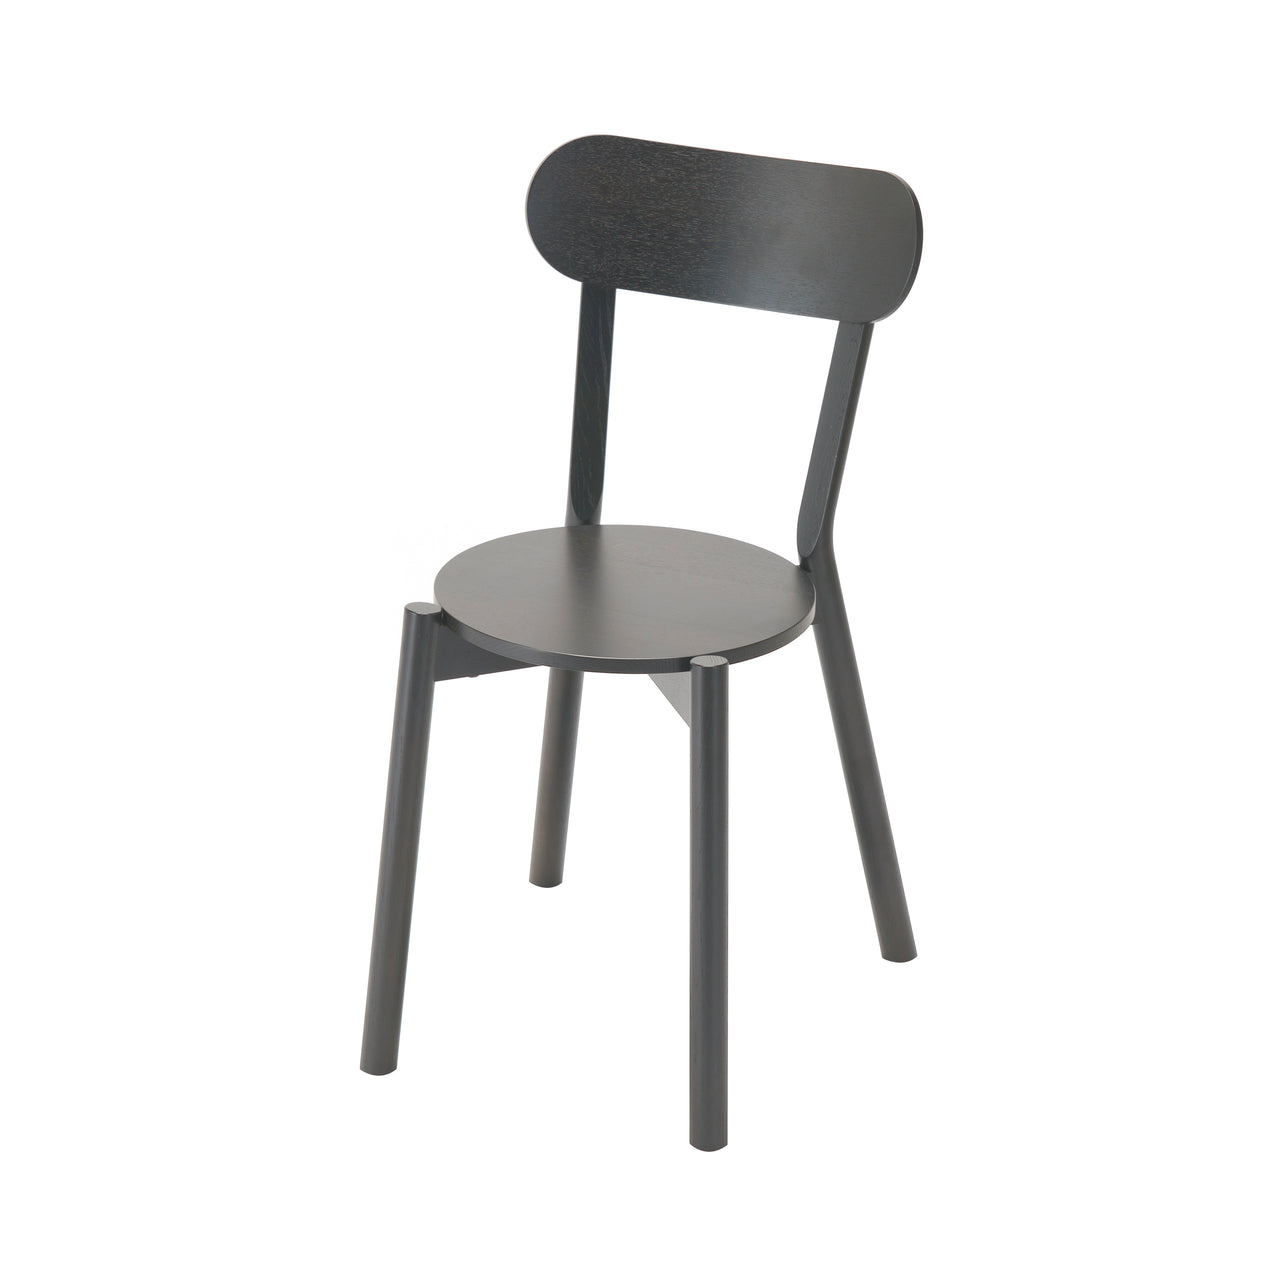 Castor Chair Stacking | Buy Karimoku New Standard online at A+R